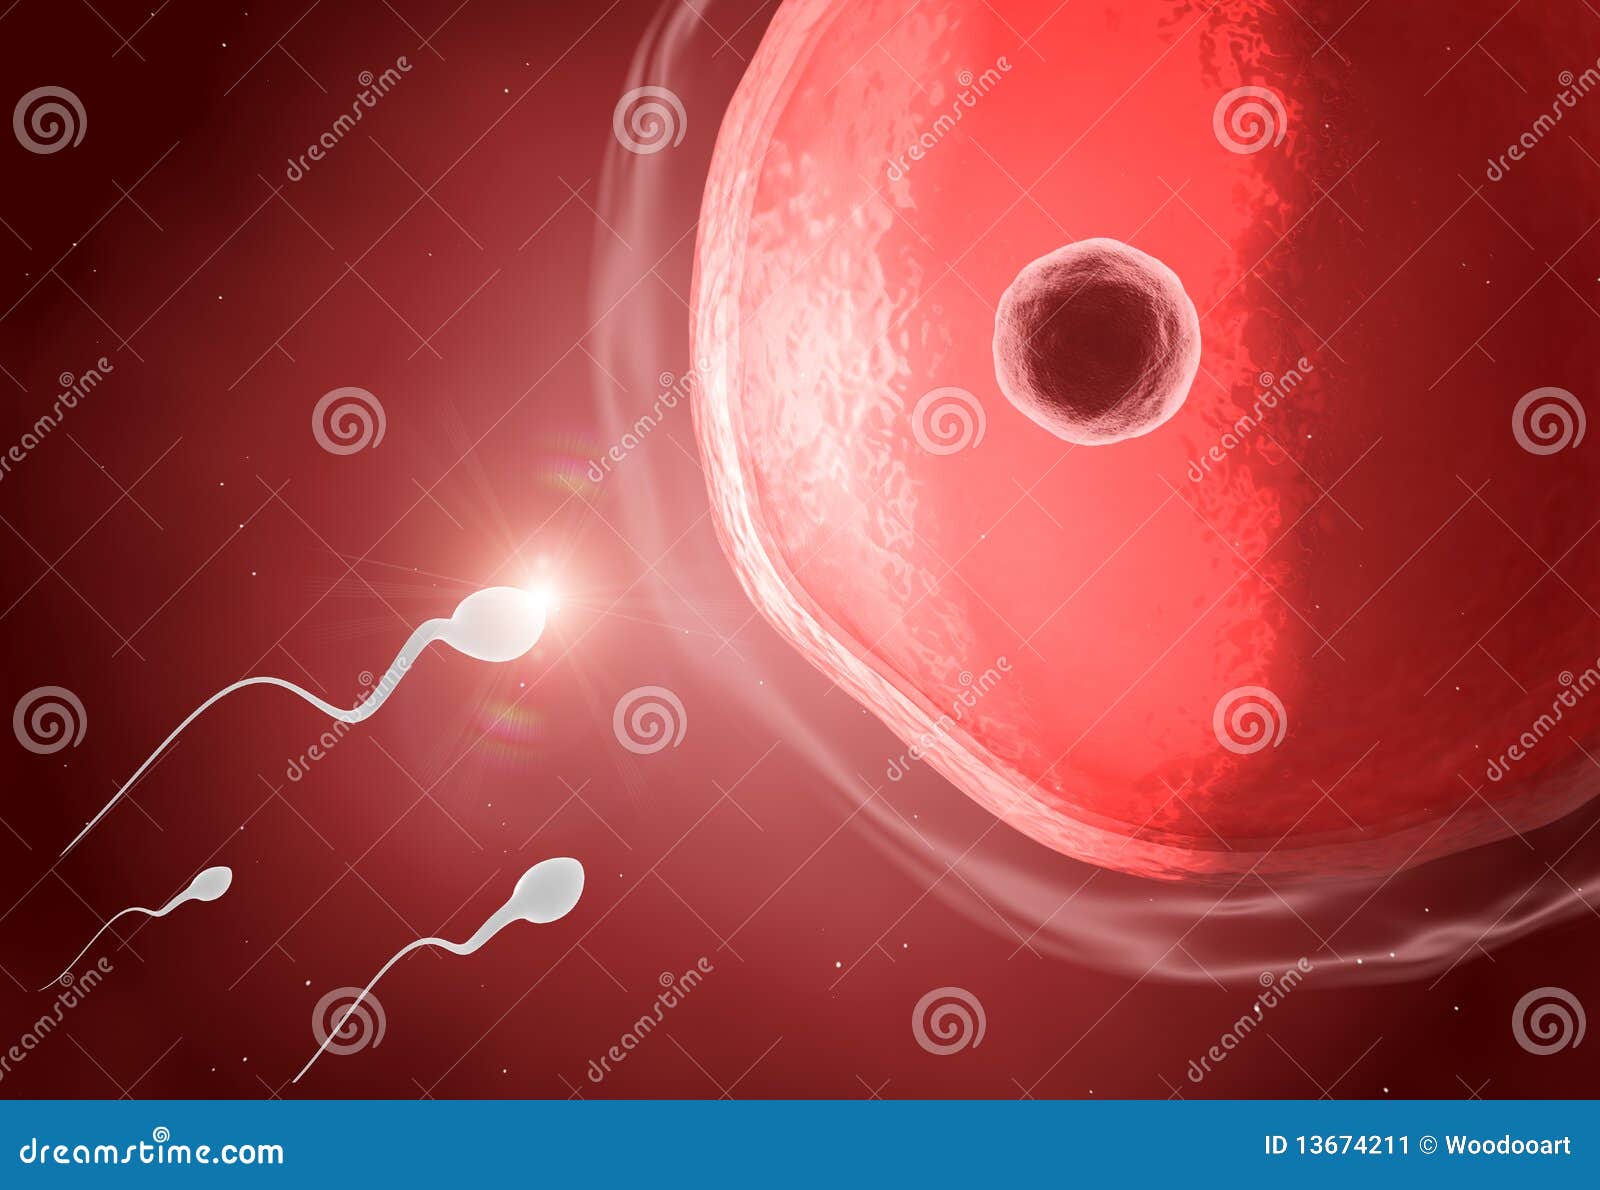 Sperm to ova outside the body